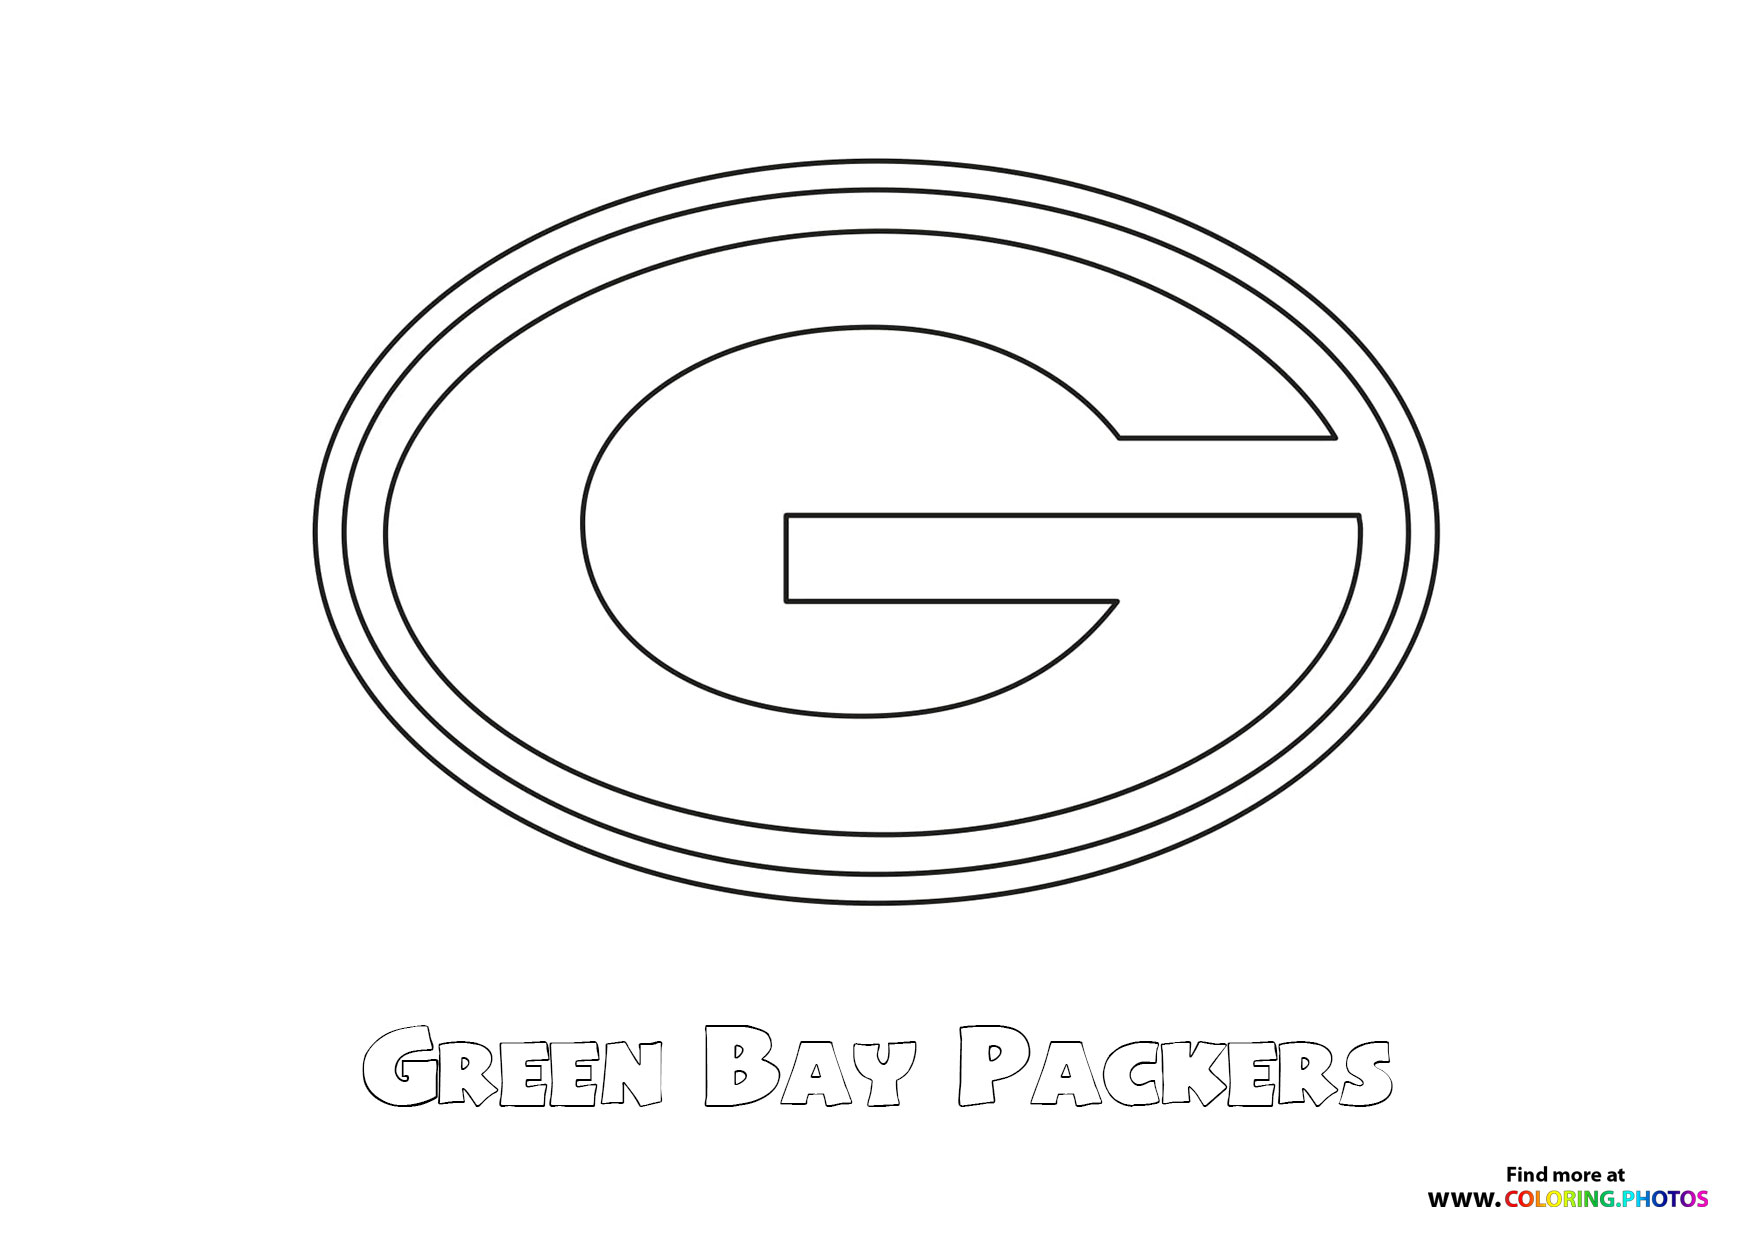 Green bay packers nfl logo